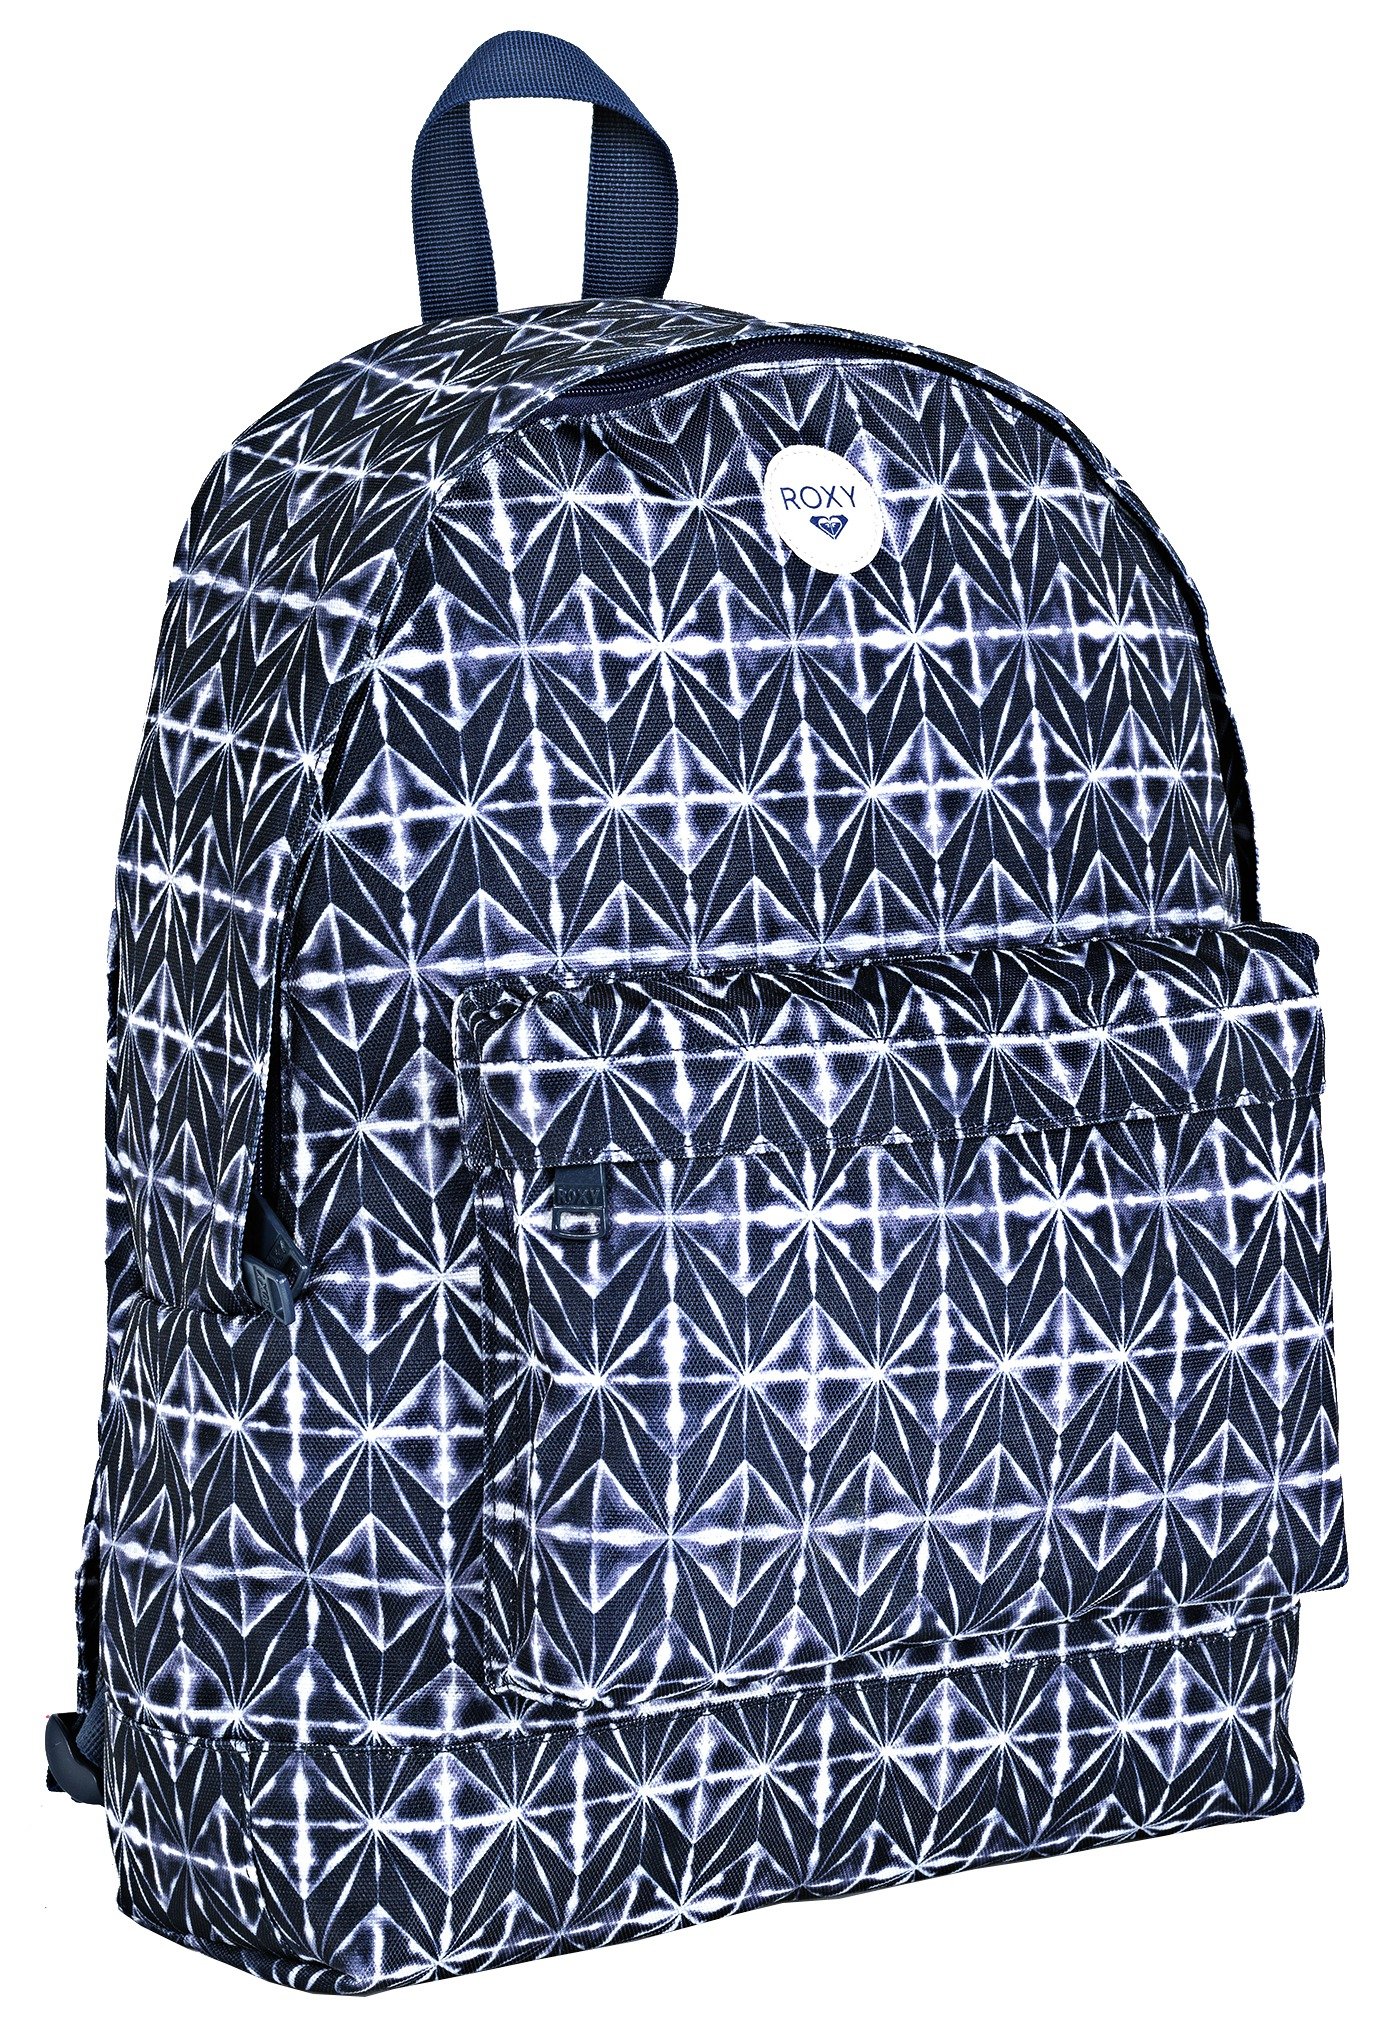 Roxy Aztec Blue Backpack